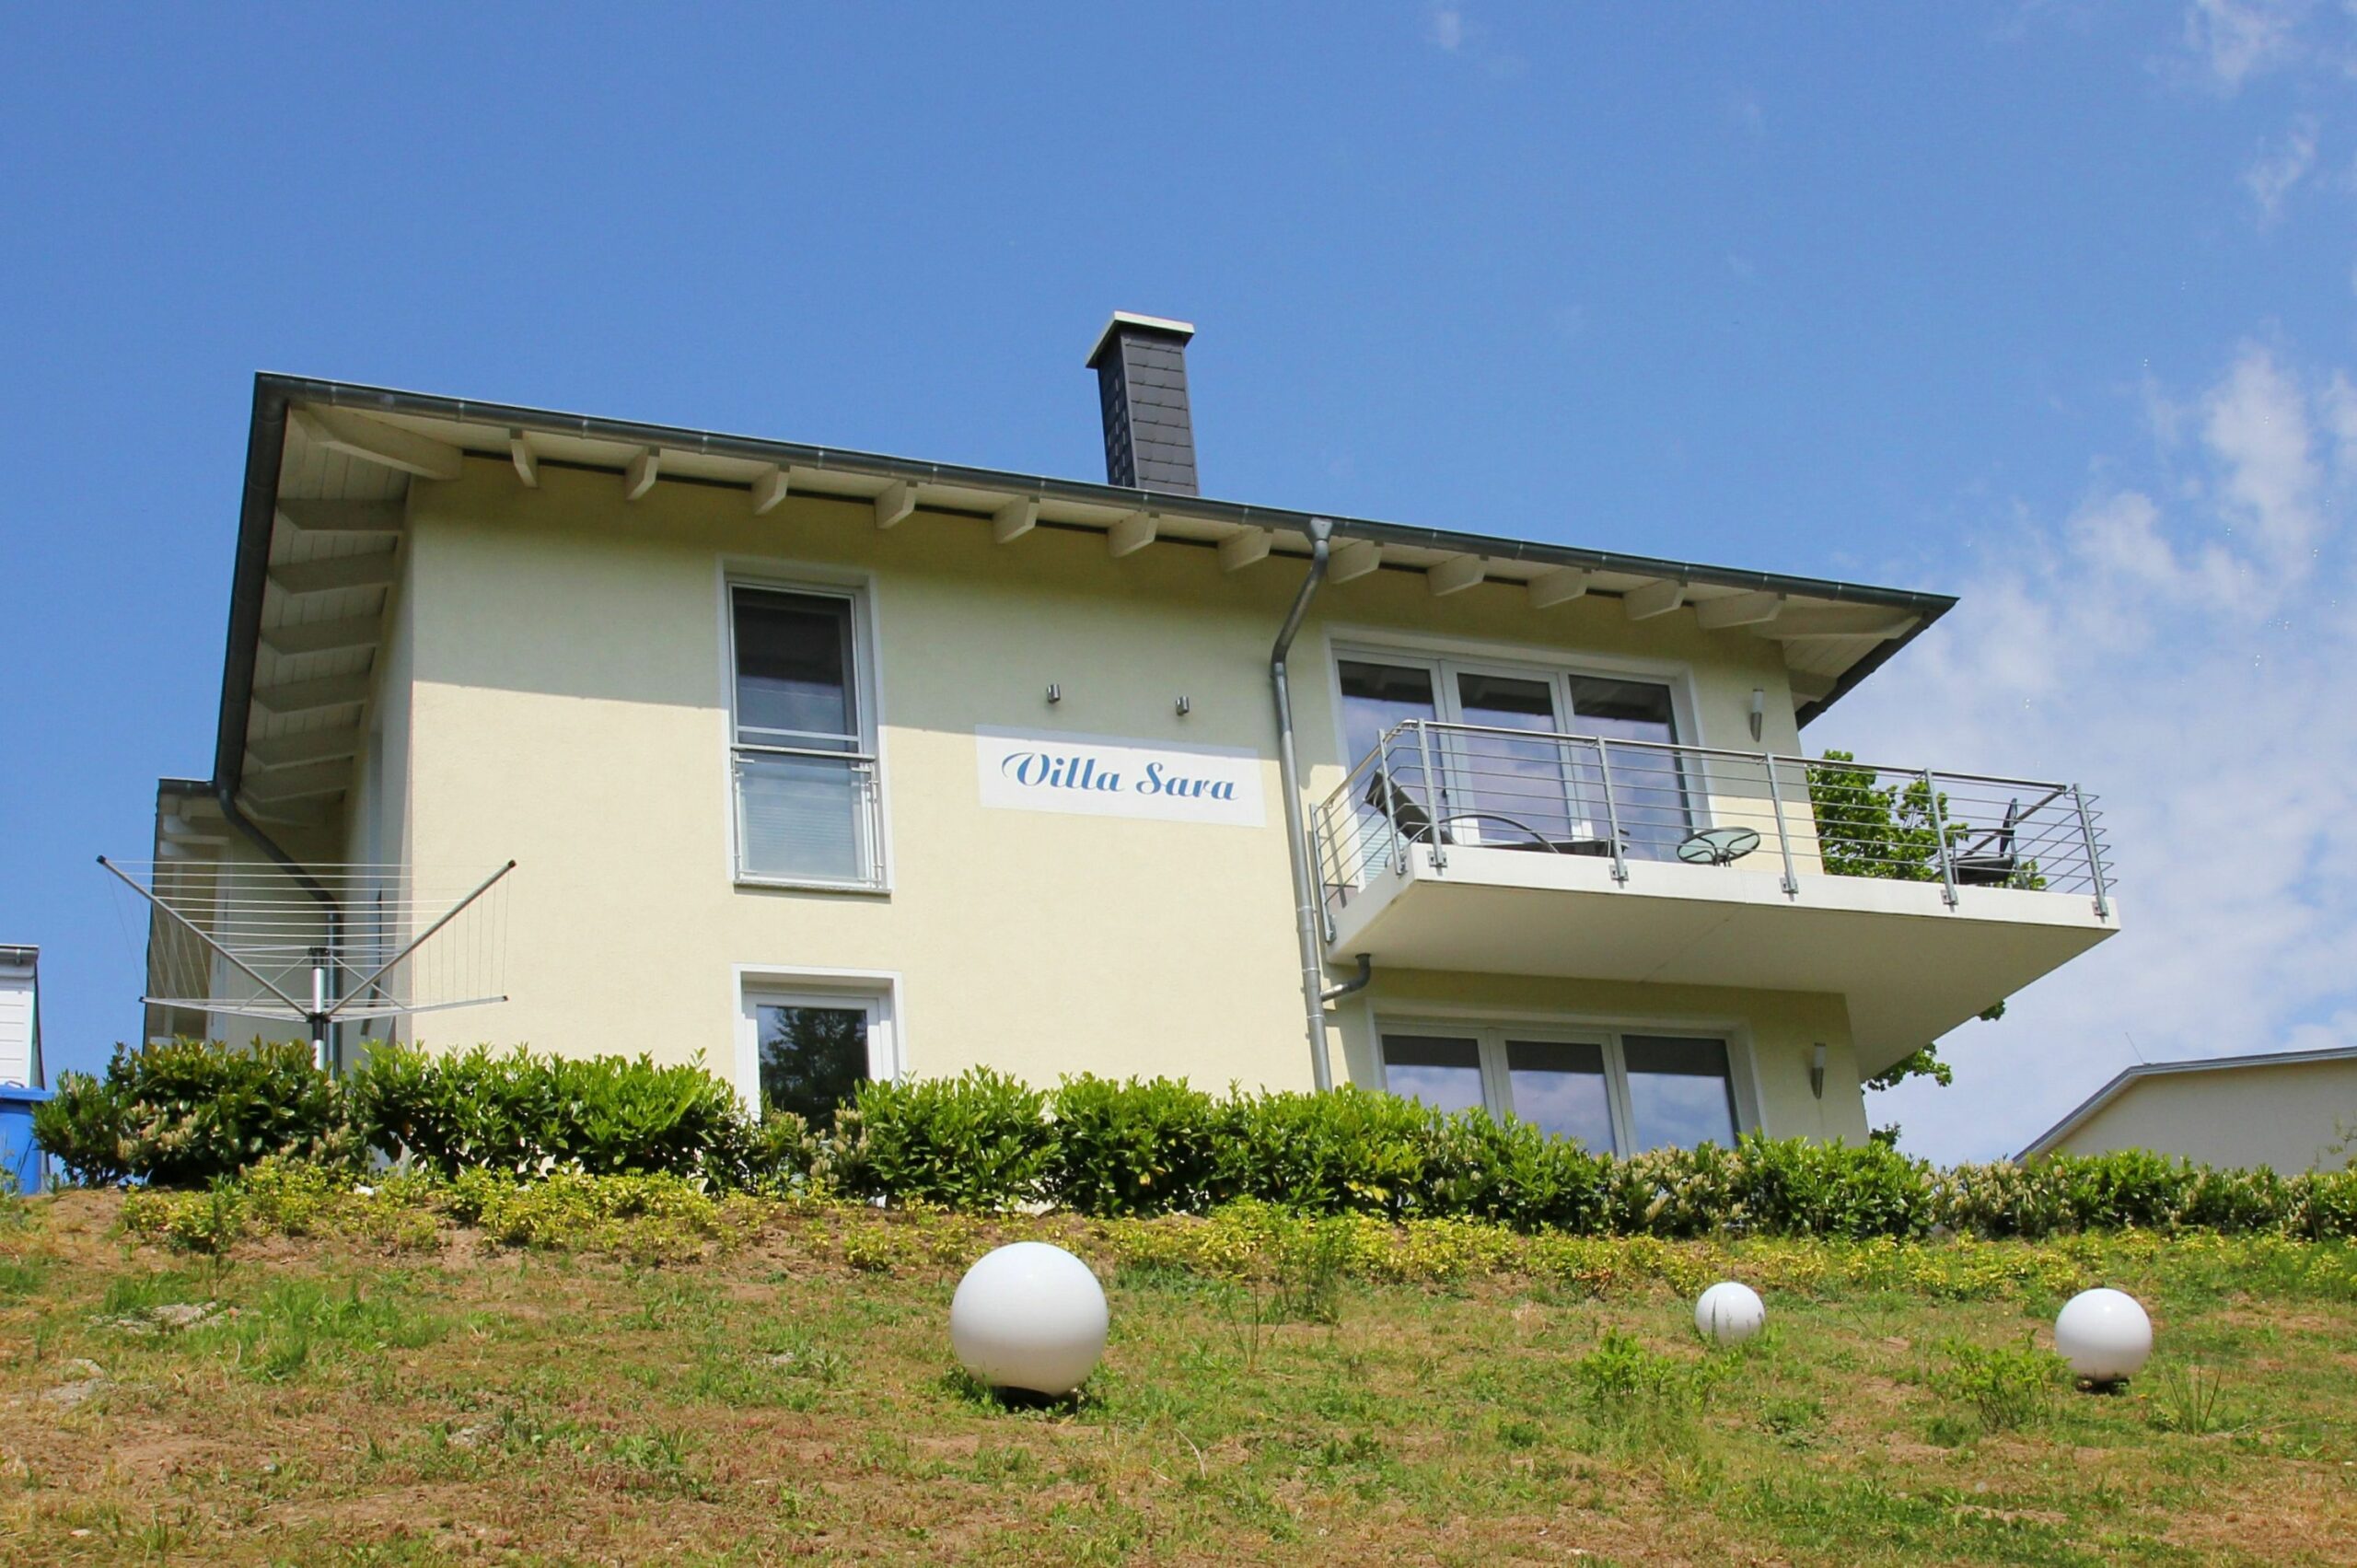 Villa Sara in Göhren